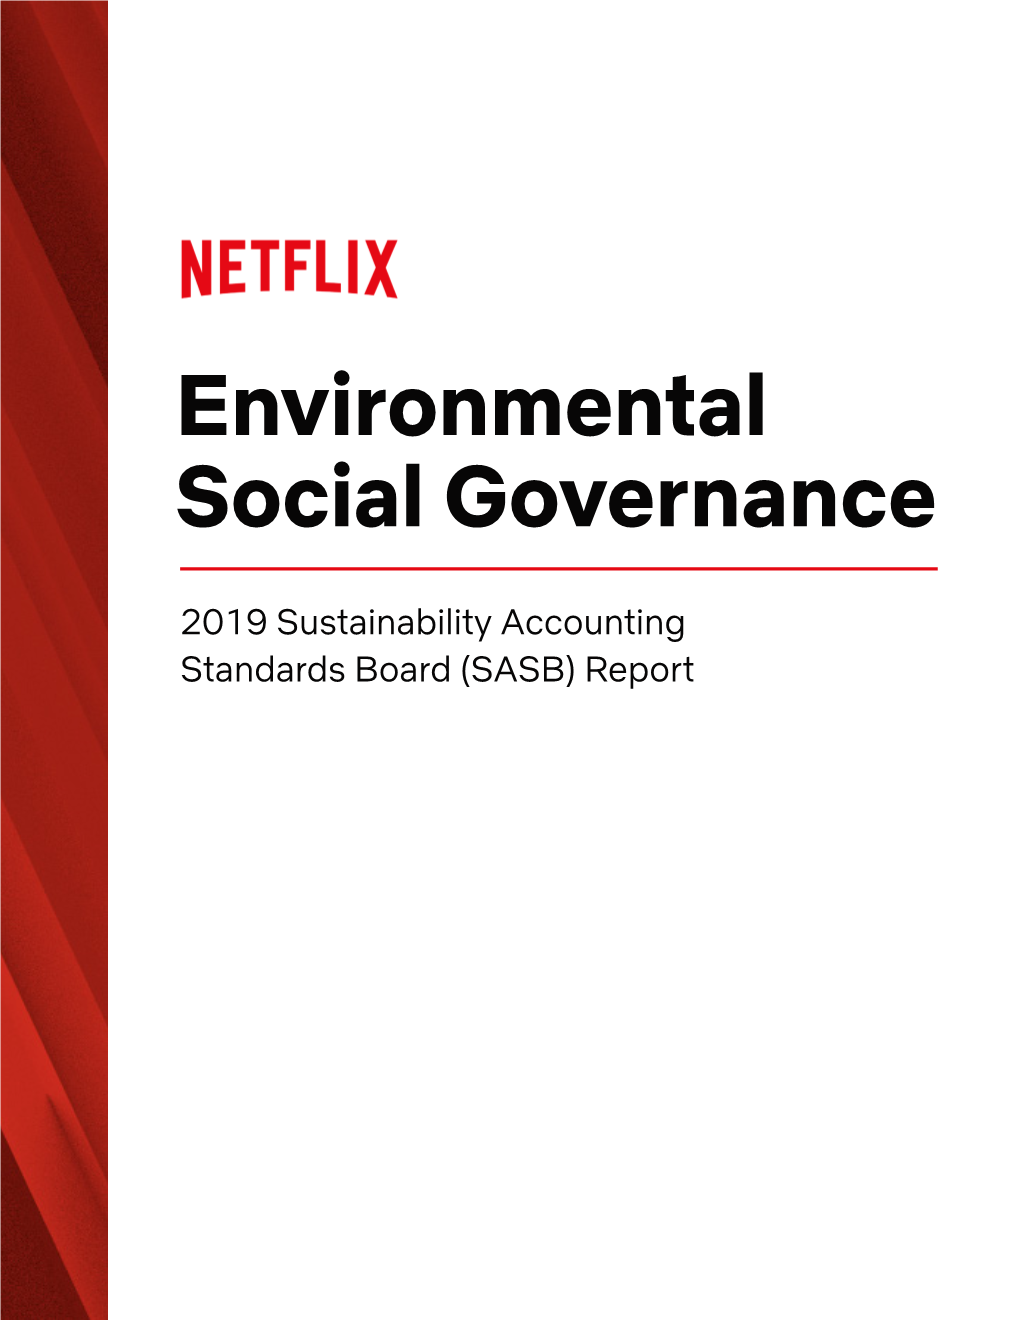 Netflix Environmental Social Governance Report